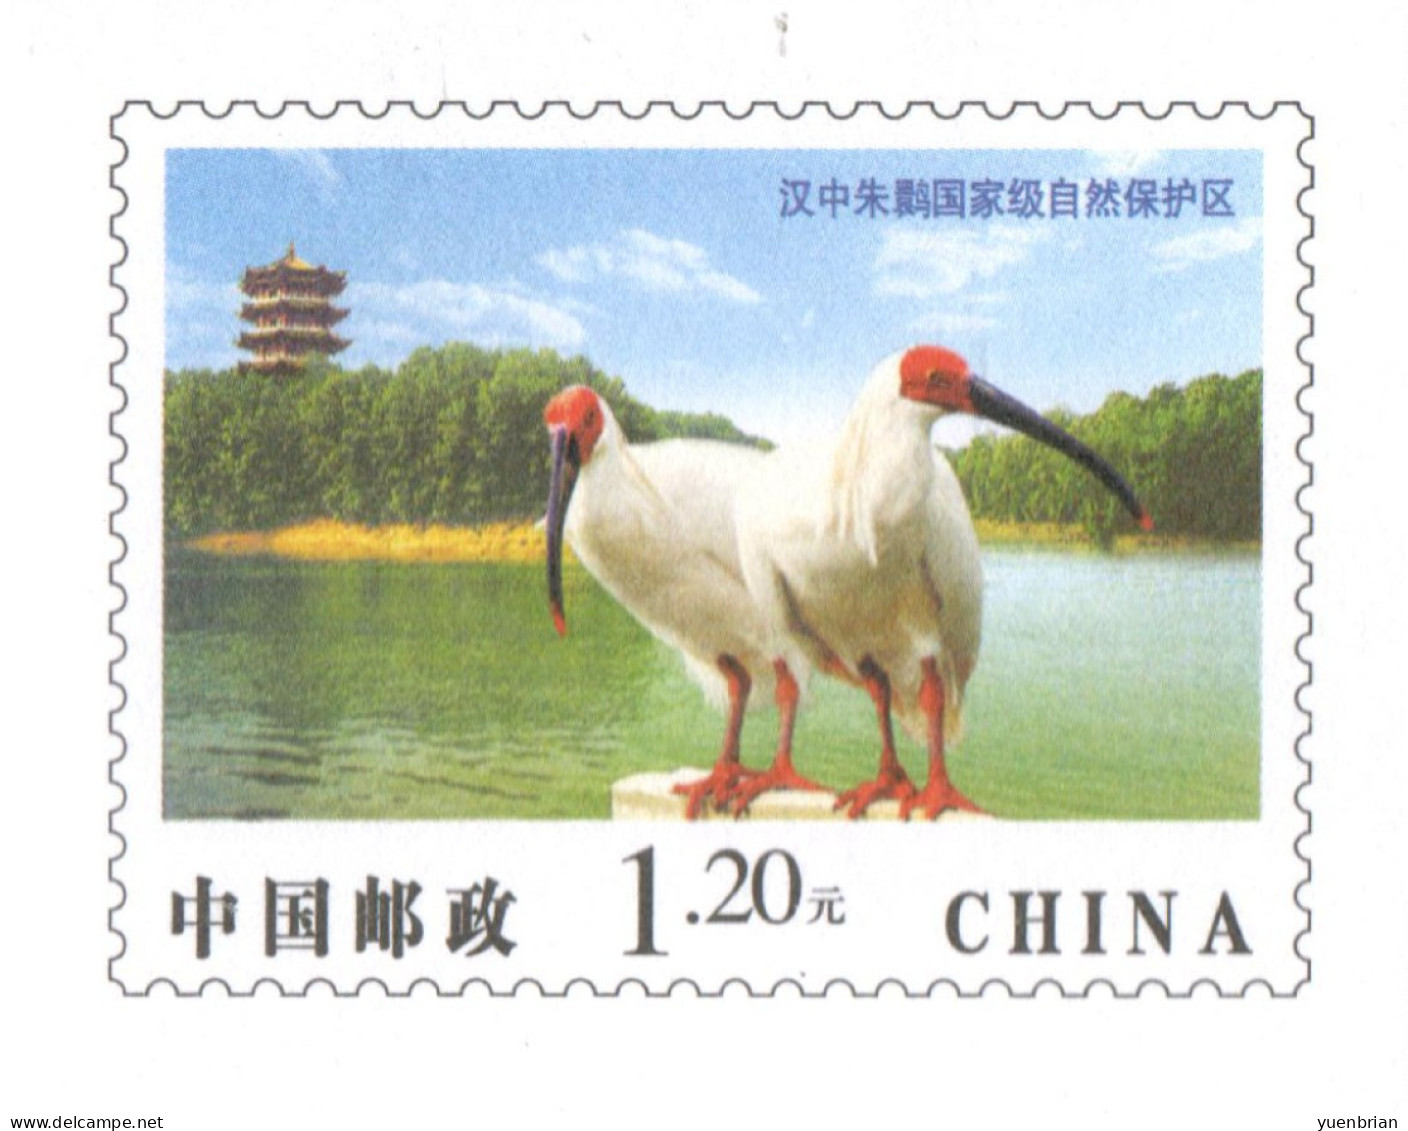 China 2009, Postal Stationary, Pre-Stamped Cover $1.20, Crane, MNH** - Kranichvögel